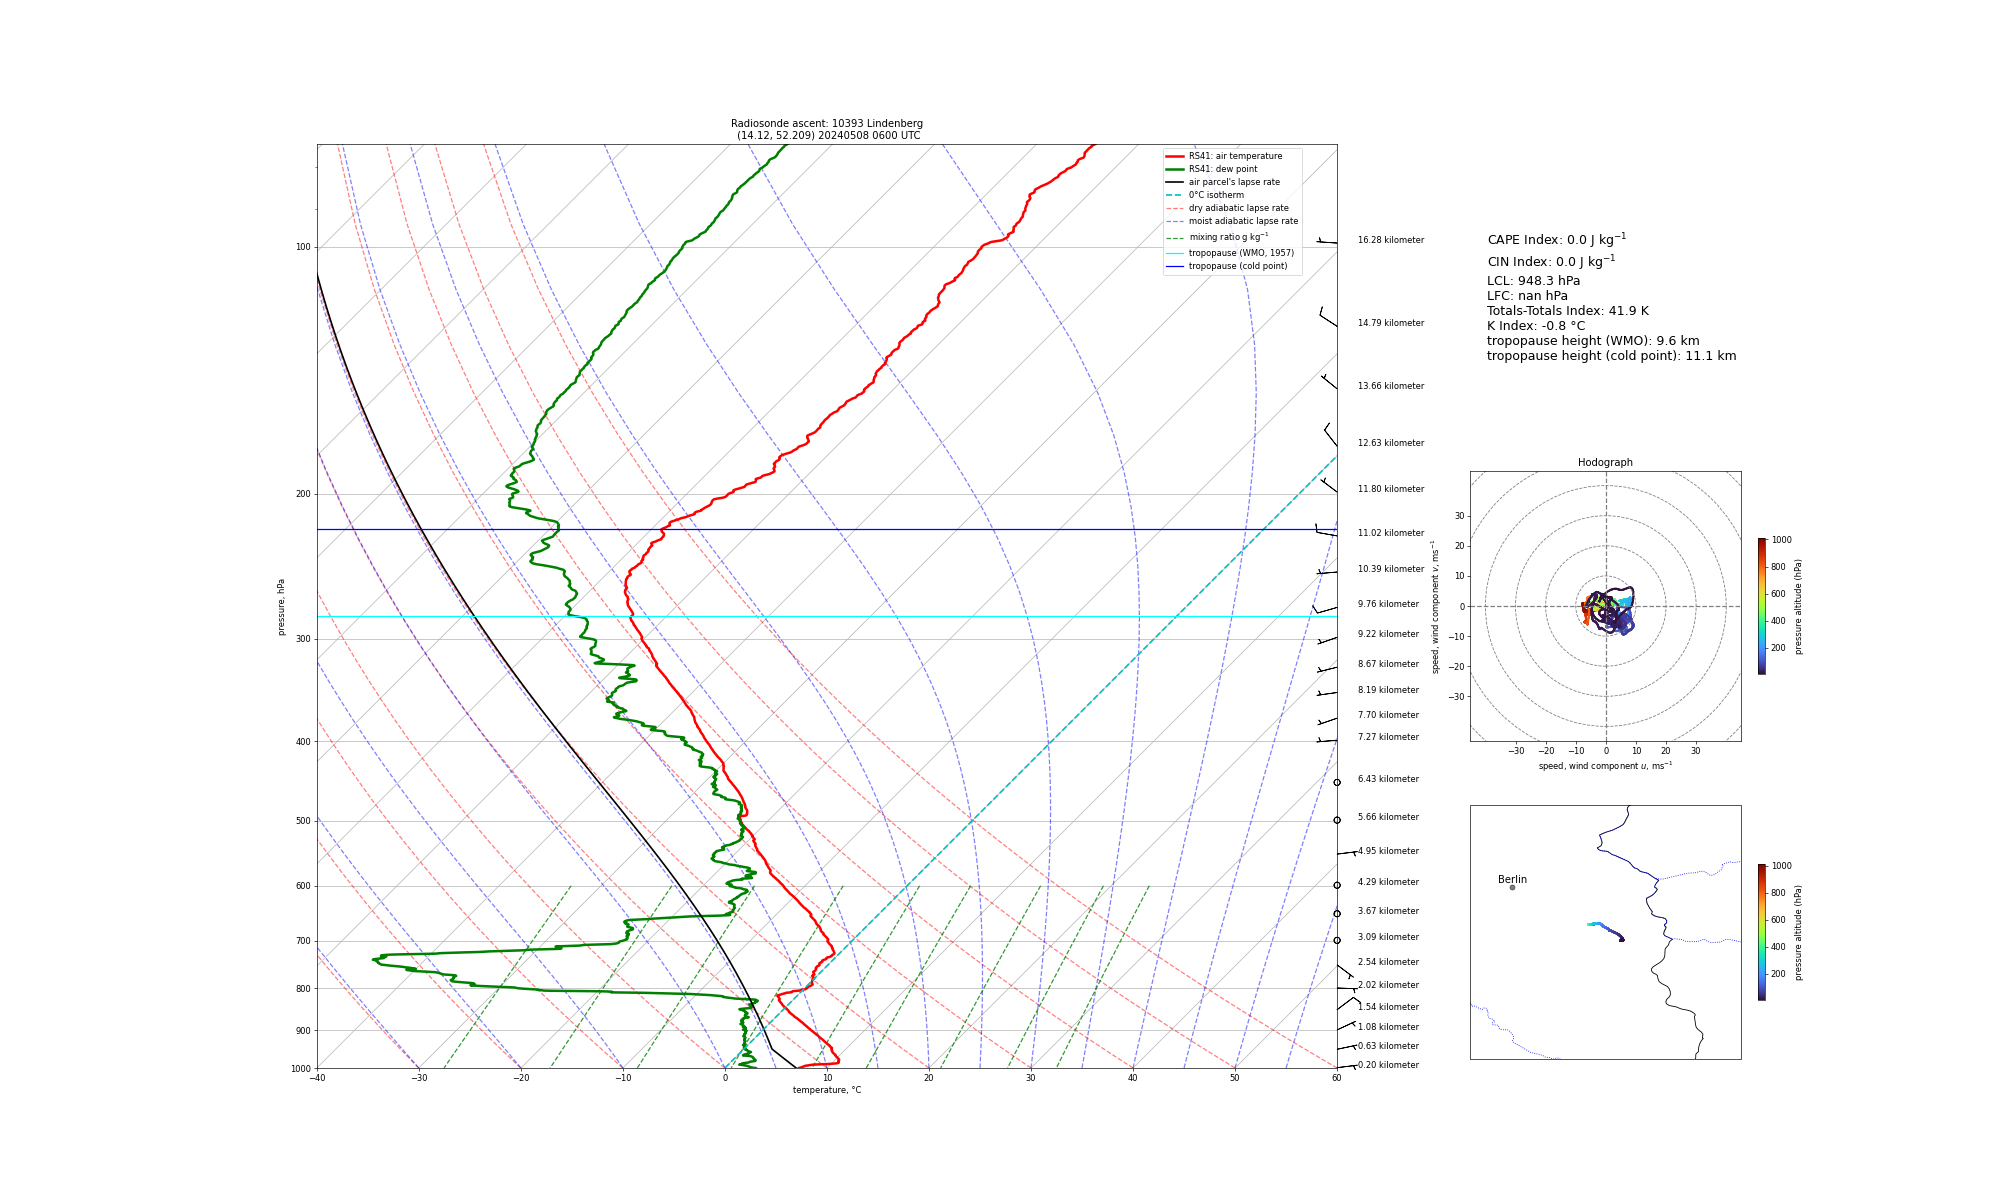 Visualisation of the radiosounding profile at Lindenberg at 0600 UTC